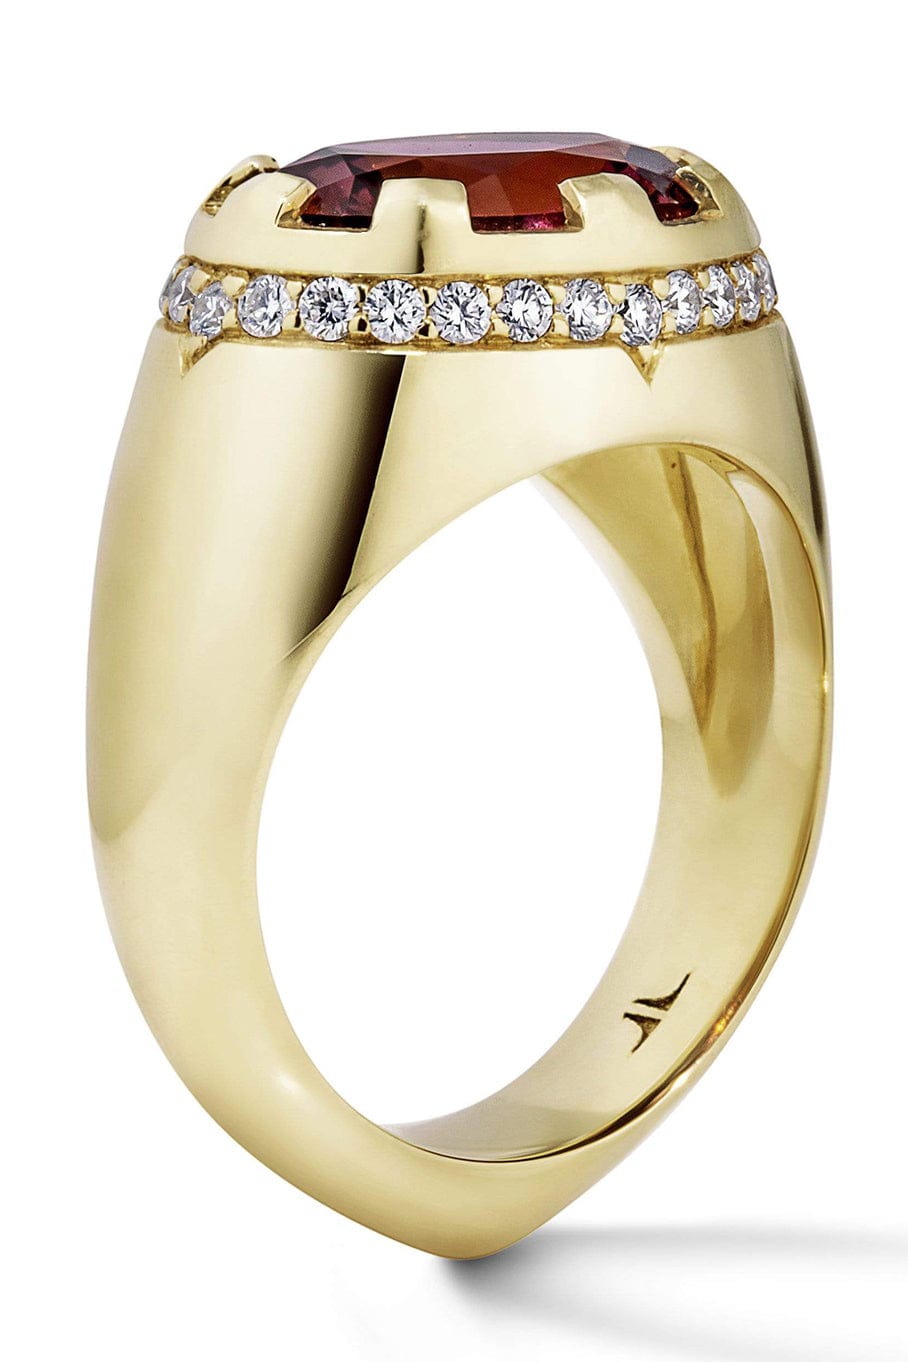 ANDY LIF-Pink Tourmaline and Diamond Ring-YELLOW GOLD